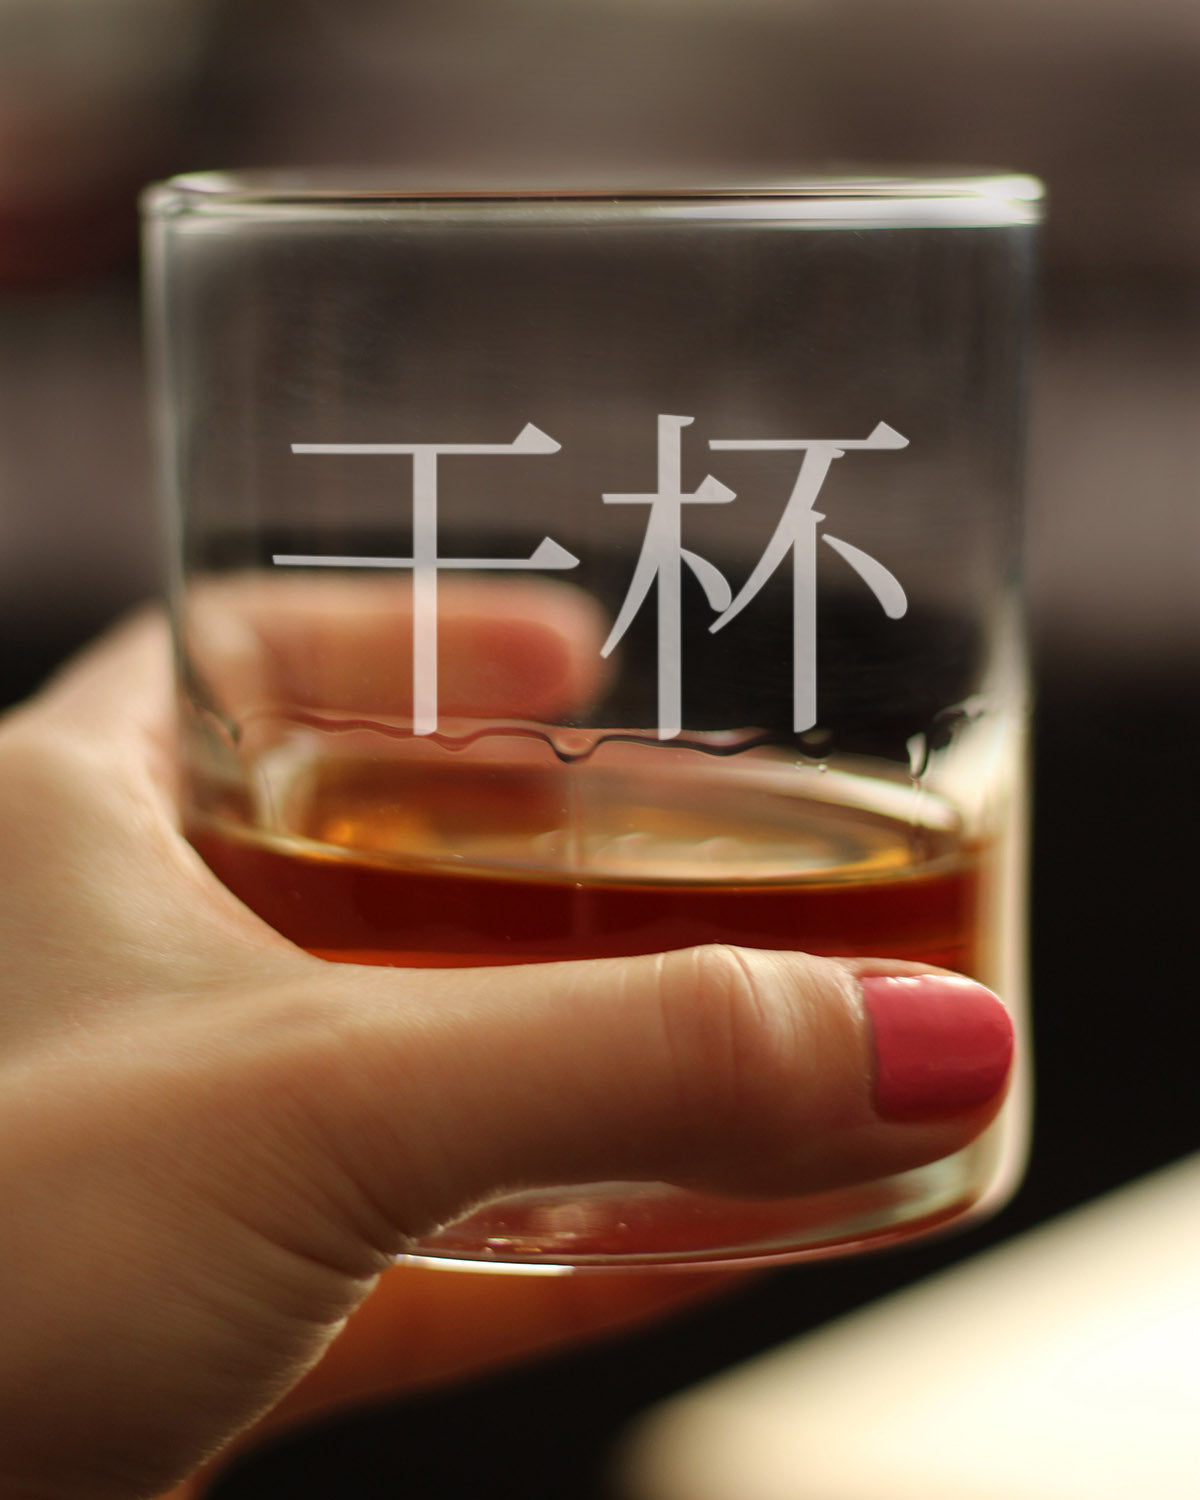 Cheers Chinese - 干杯 - Ganbei - 10 Ounce Rocks Glass